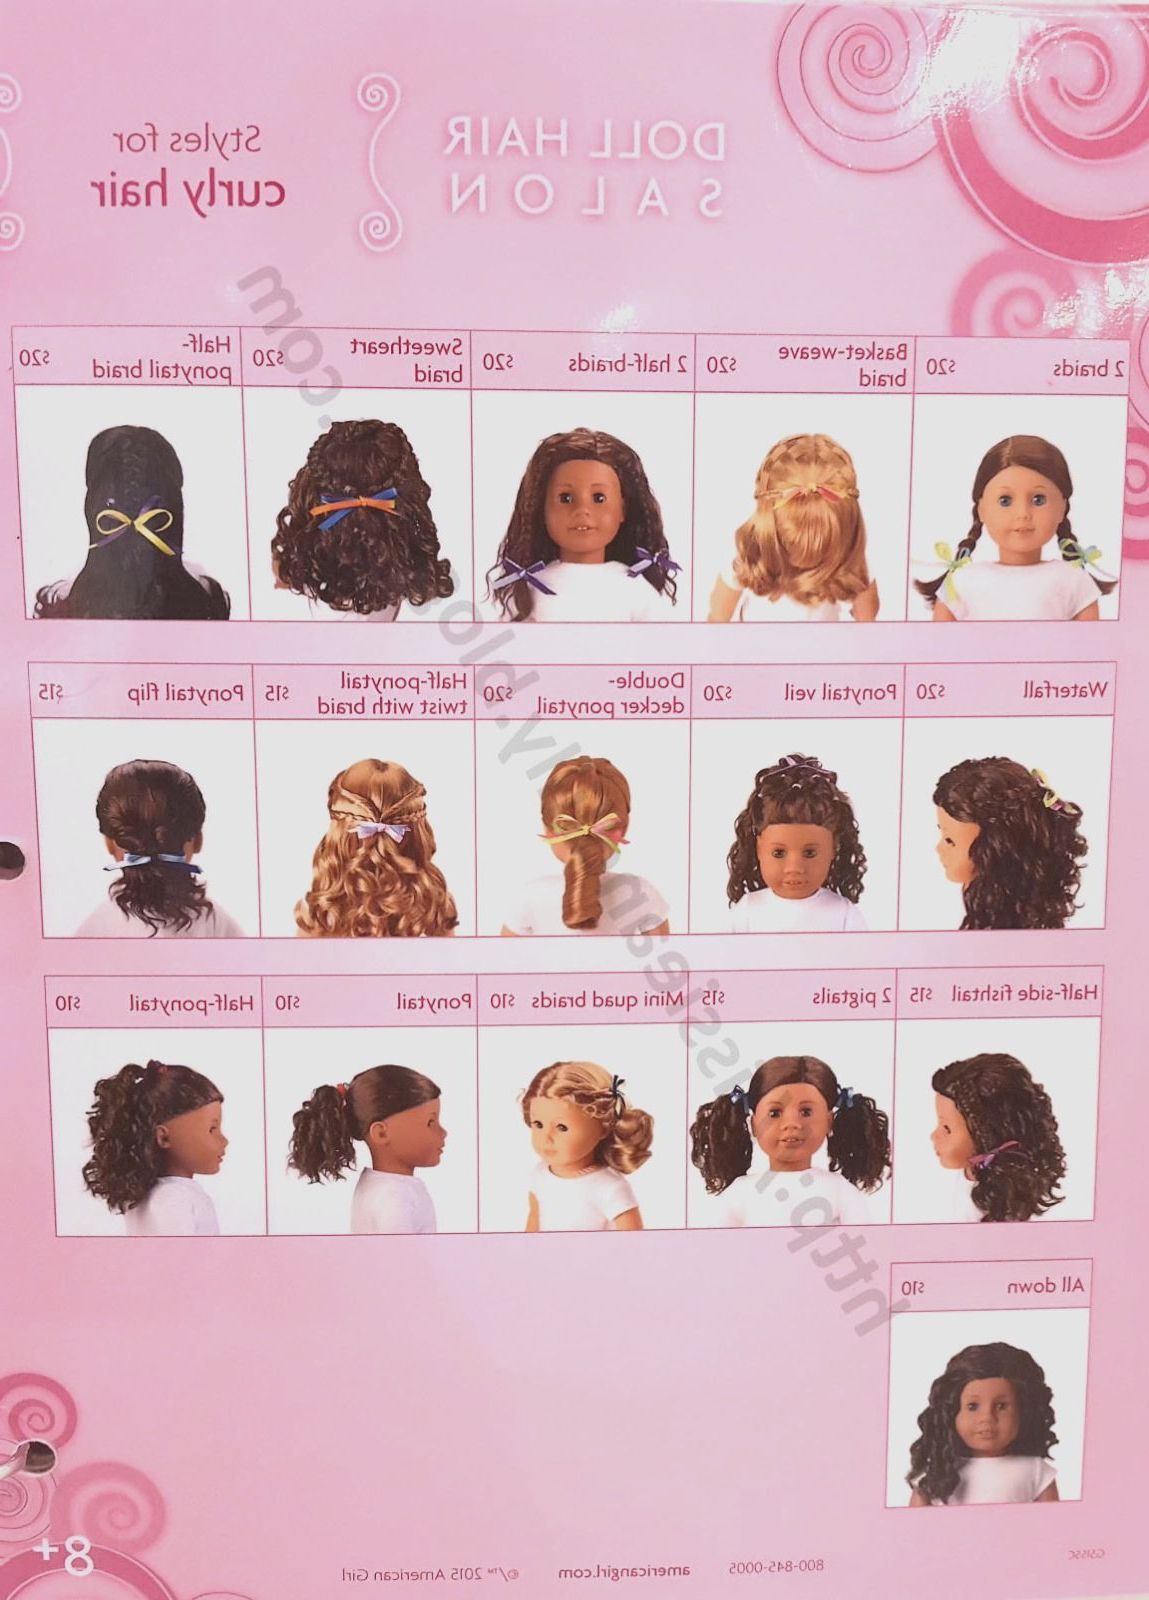 Hairstyles For Short Hair American Girl Dolls | American Girl Hair For Cute American Girl Doll Hairstyles For Short Hair (View 2 of 25)